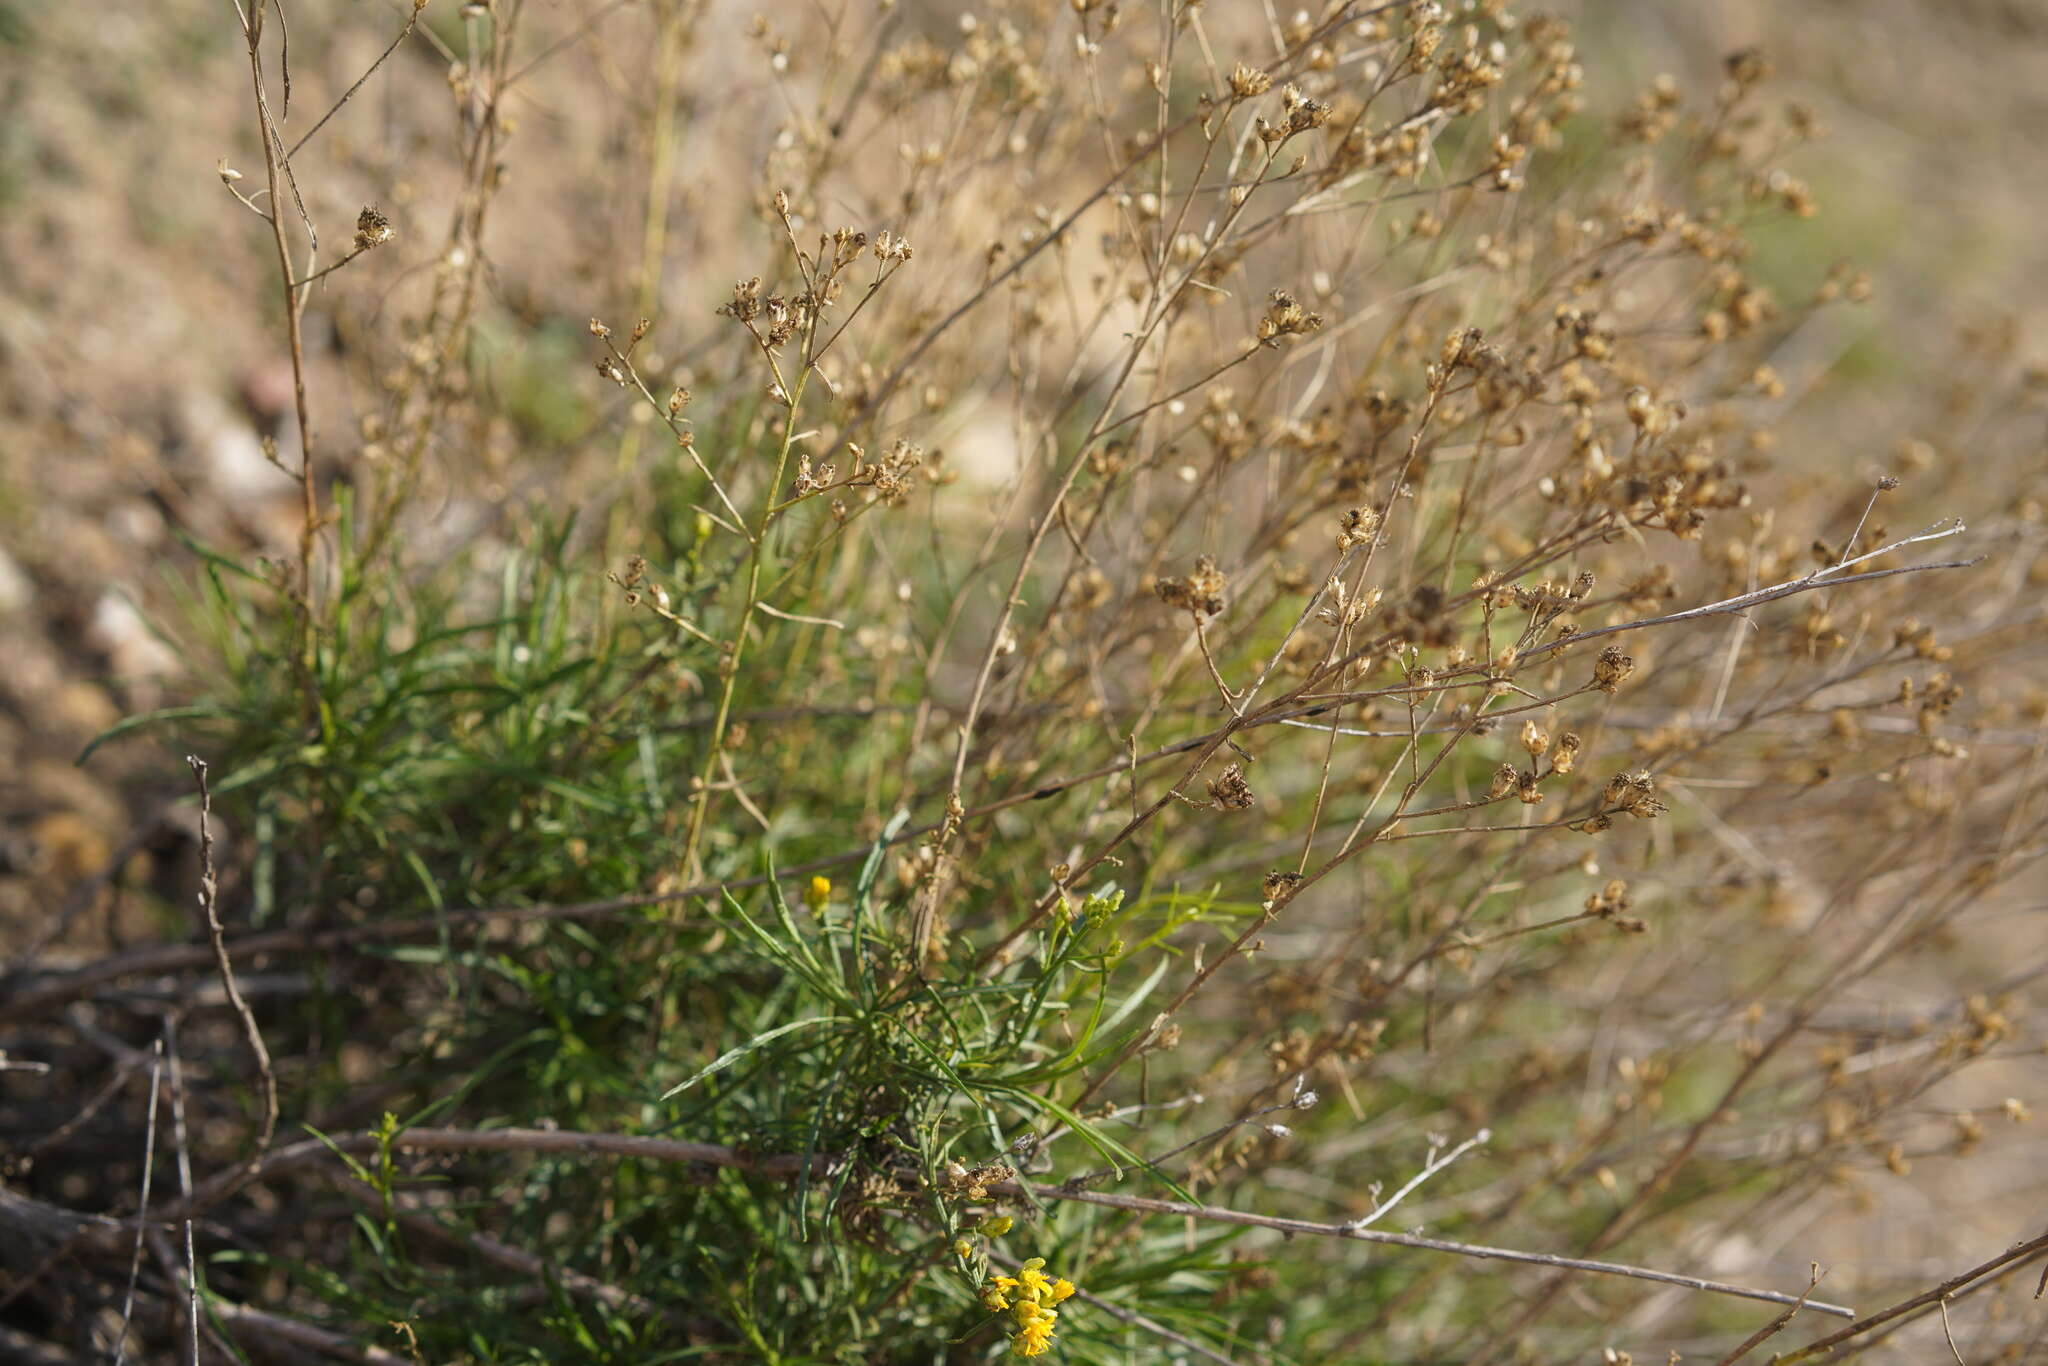 Image of San Joaquin snakeweed